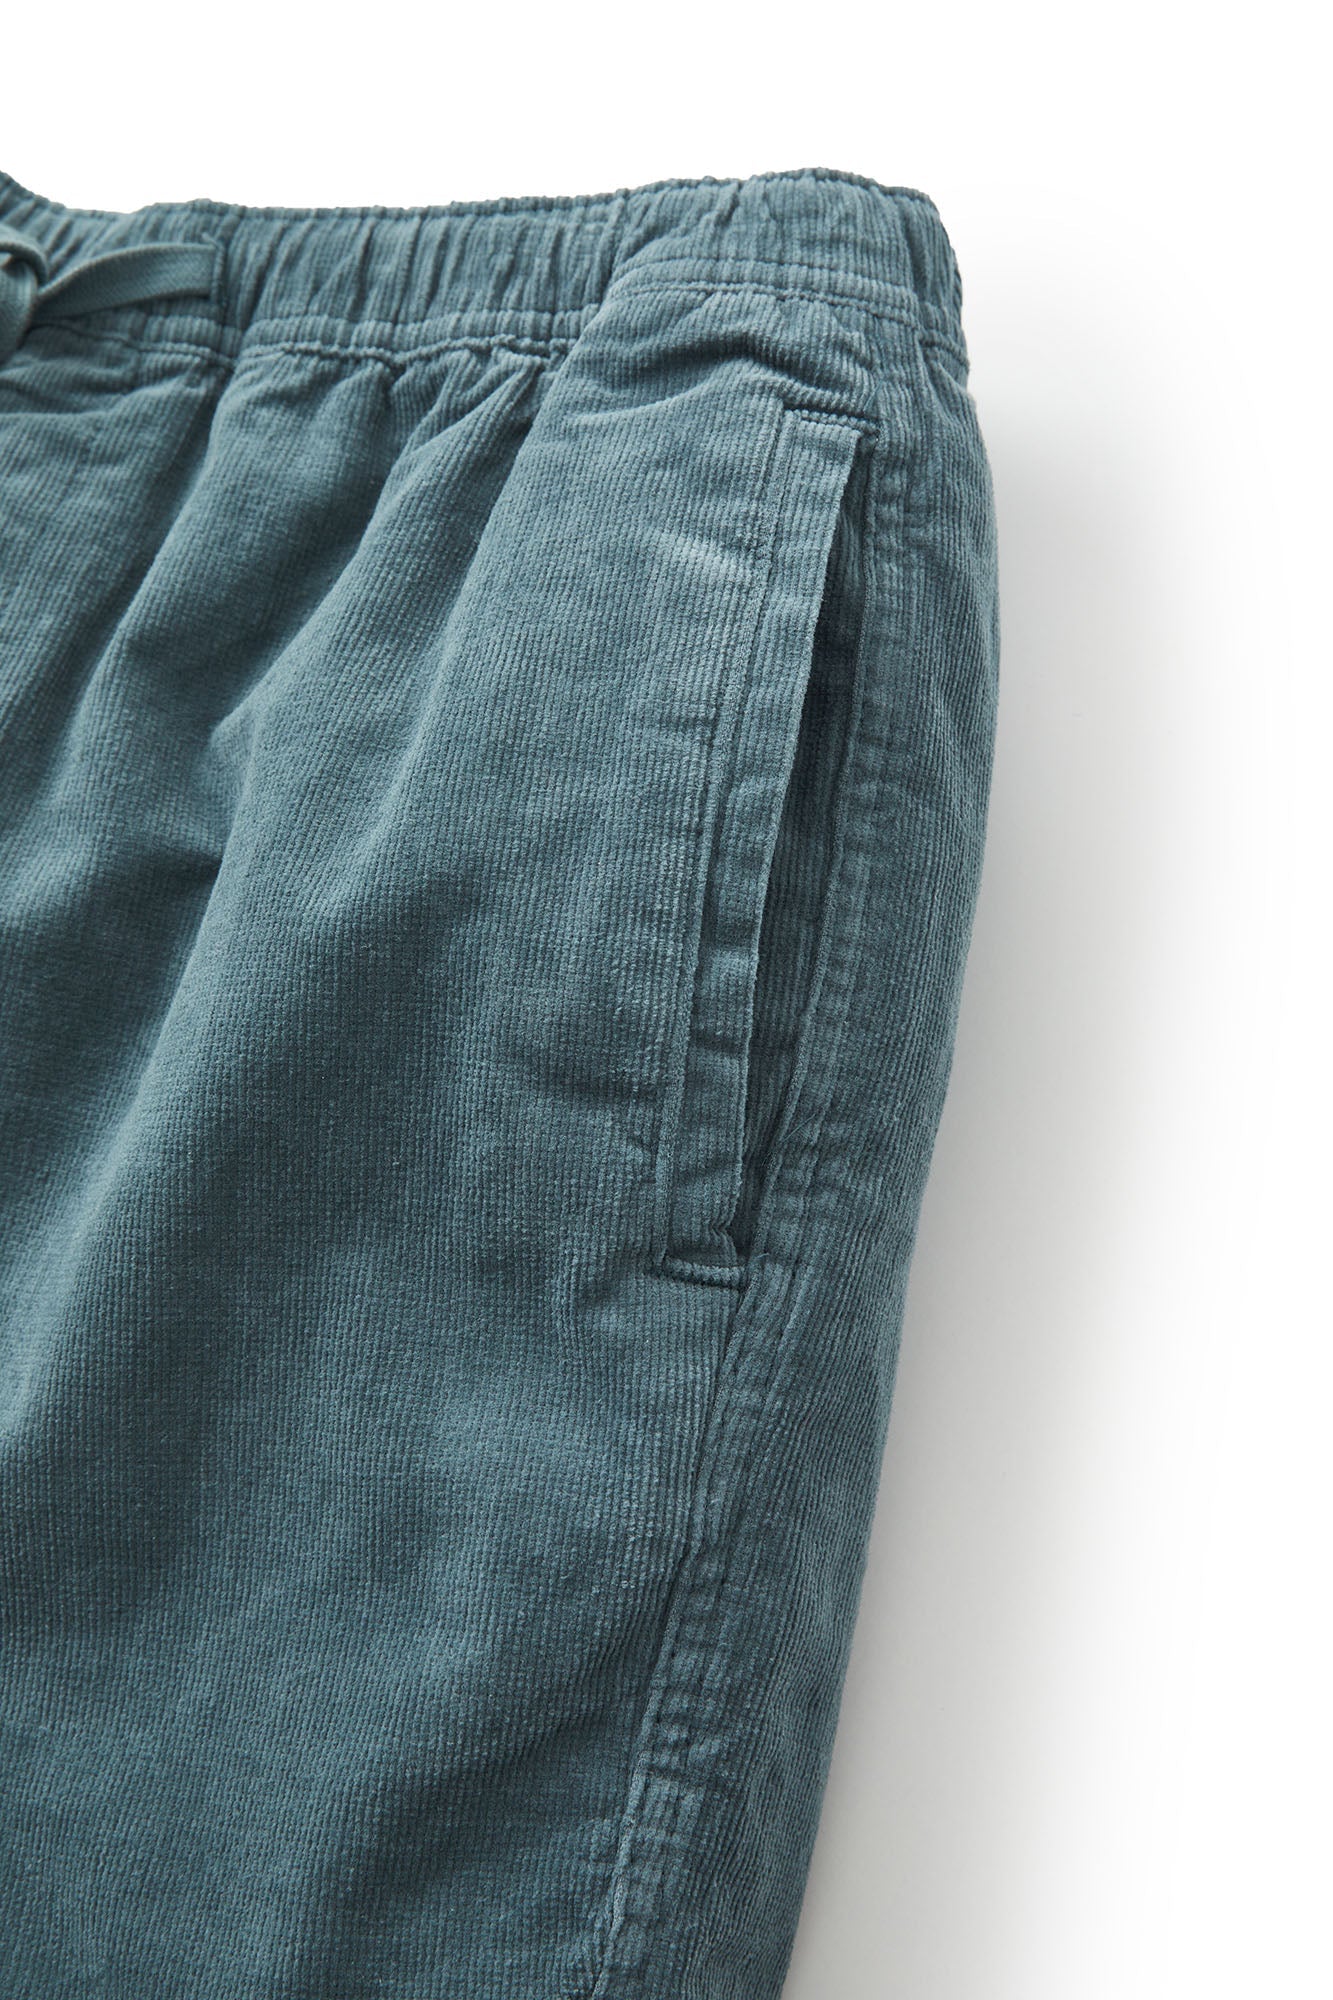 Local men's velvet shorts | Katin USA